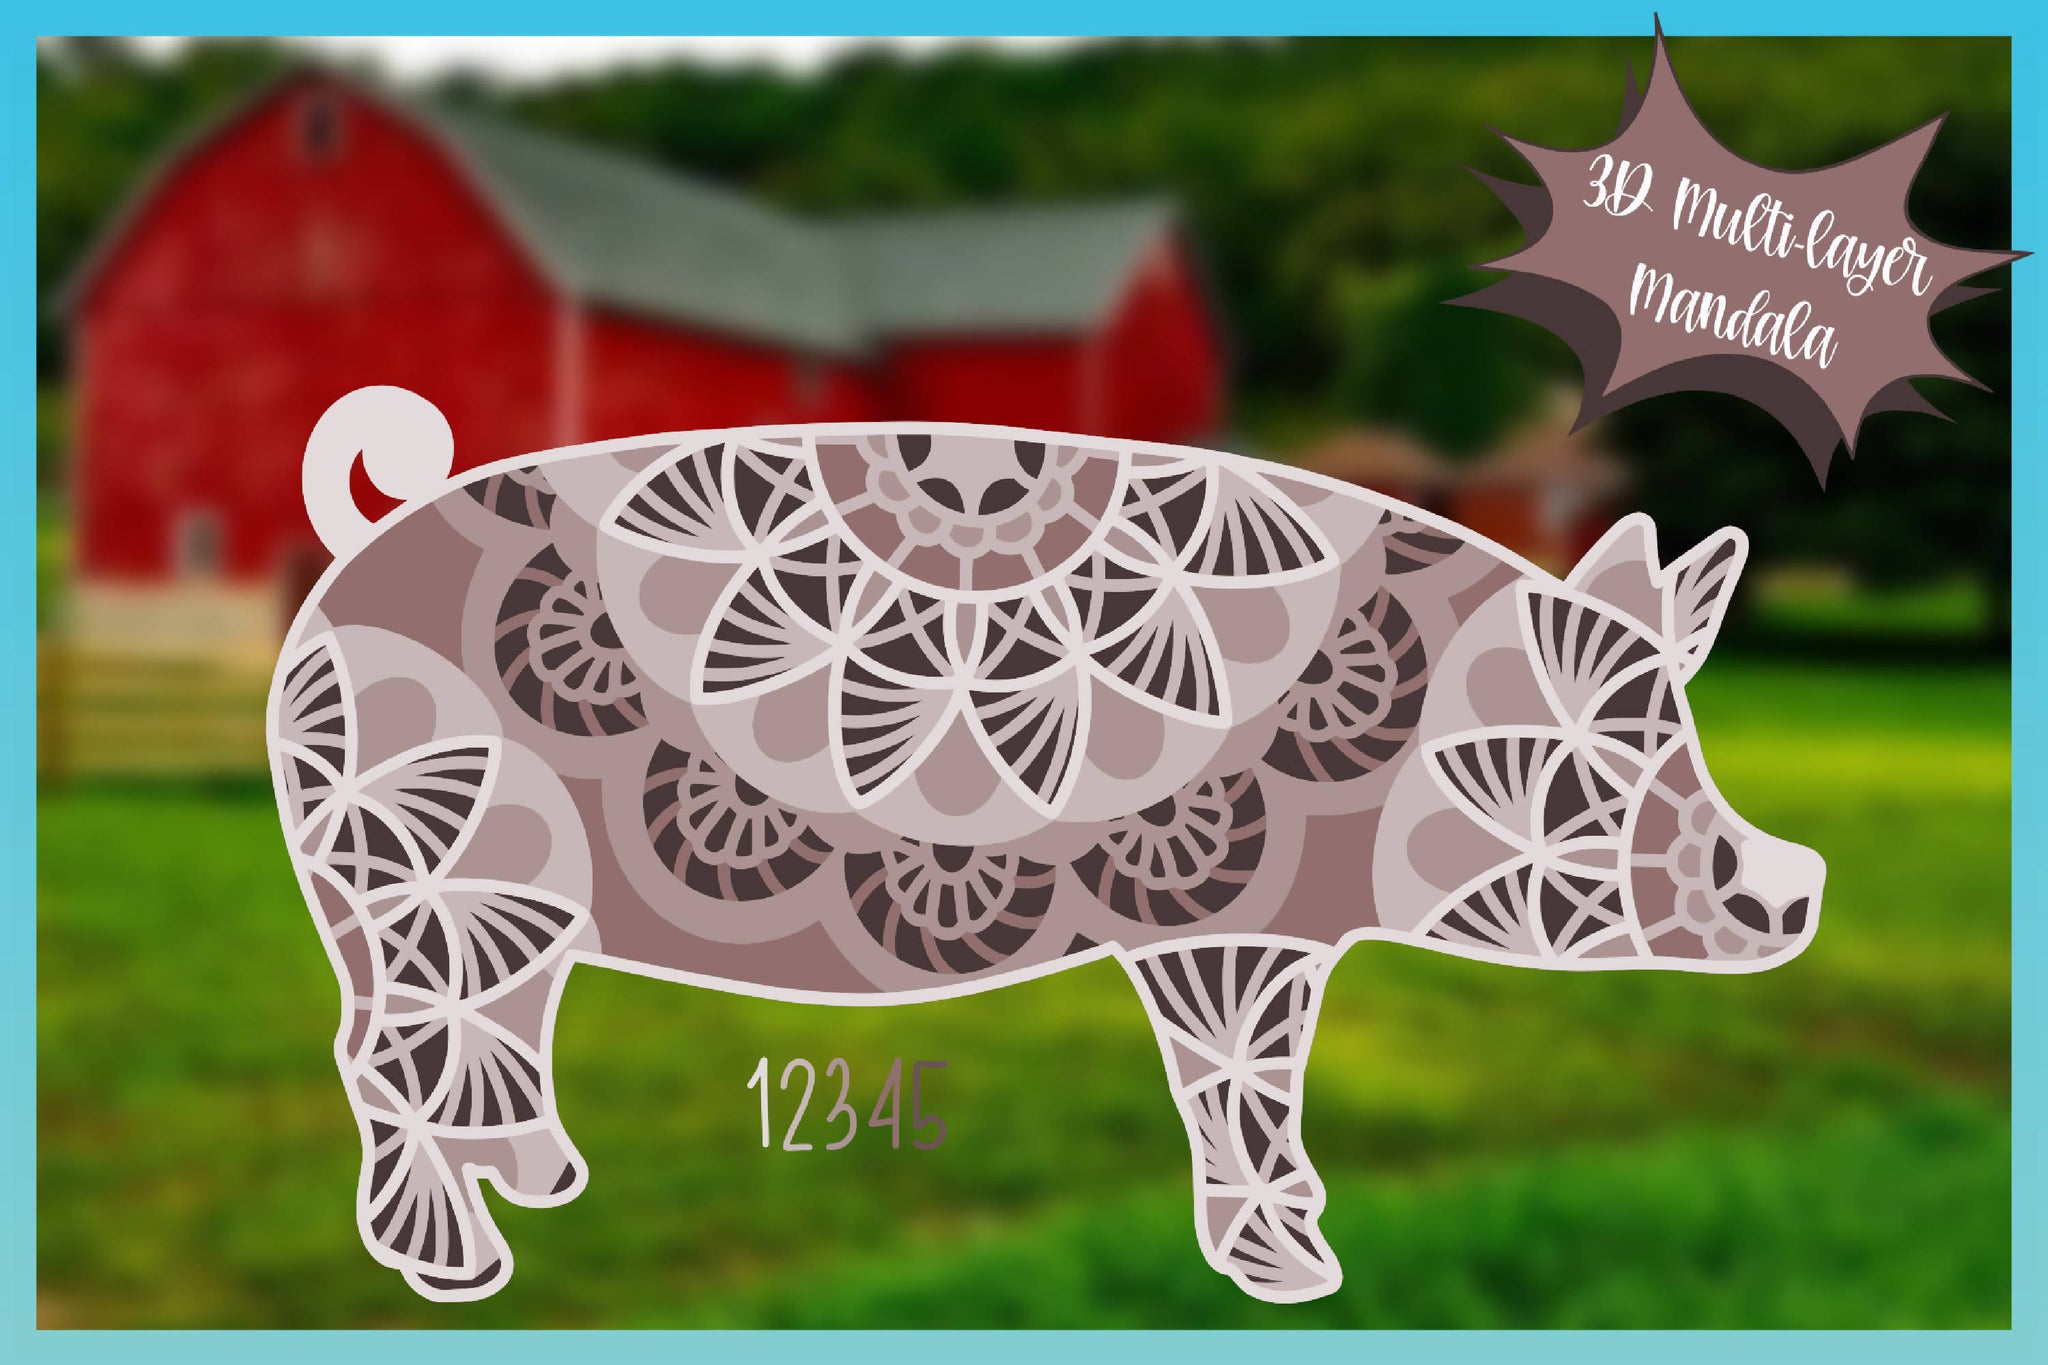 Download Easy 3D Layered Design | Pig Mandala SVG file | Multi ...